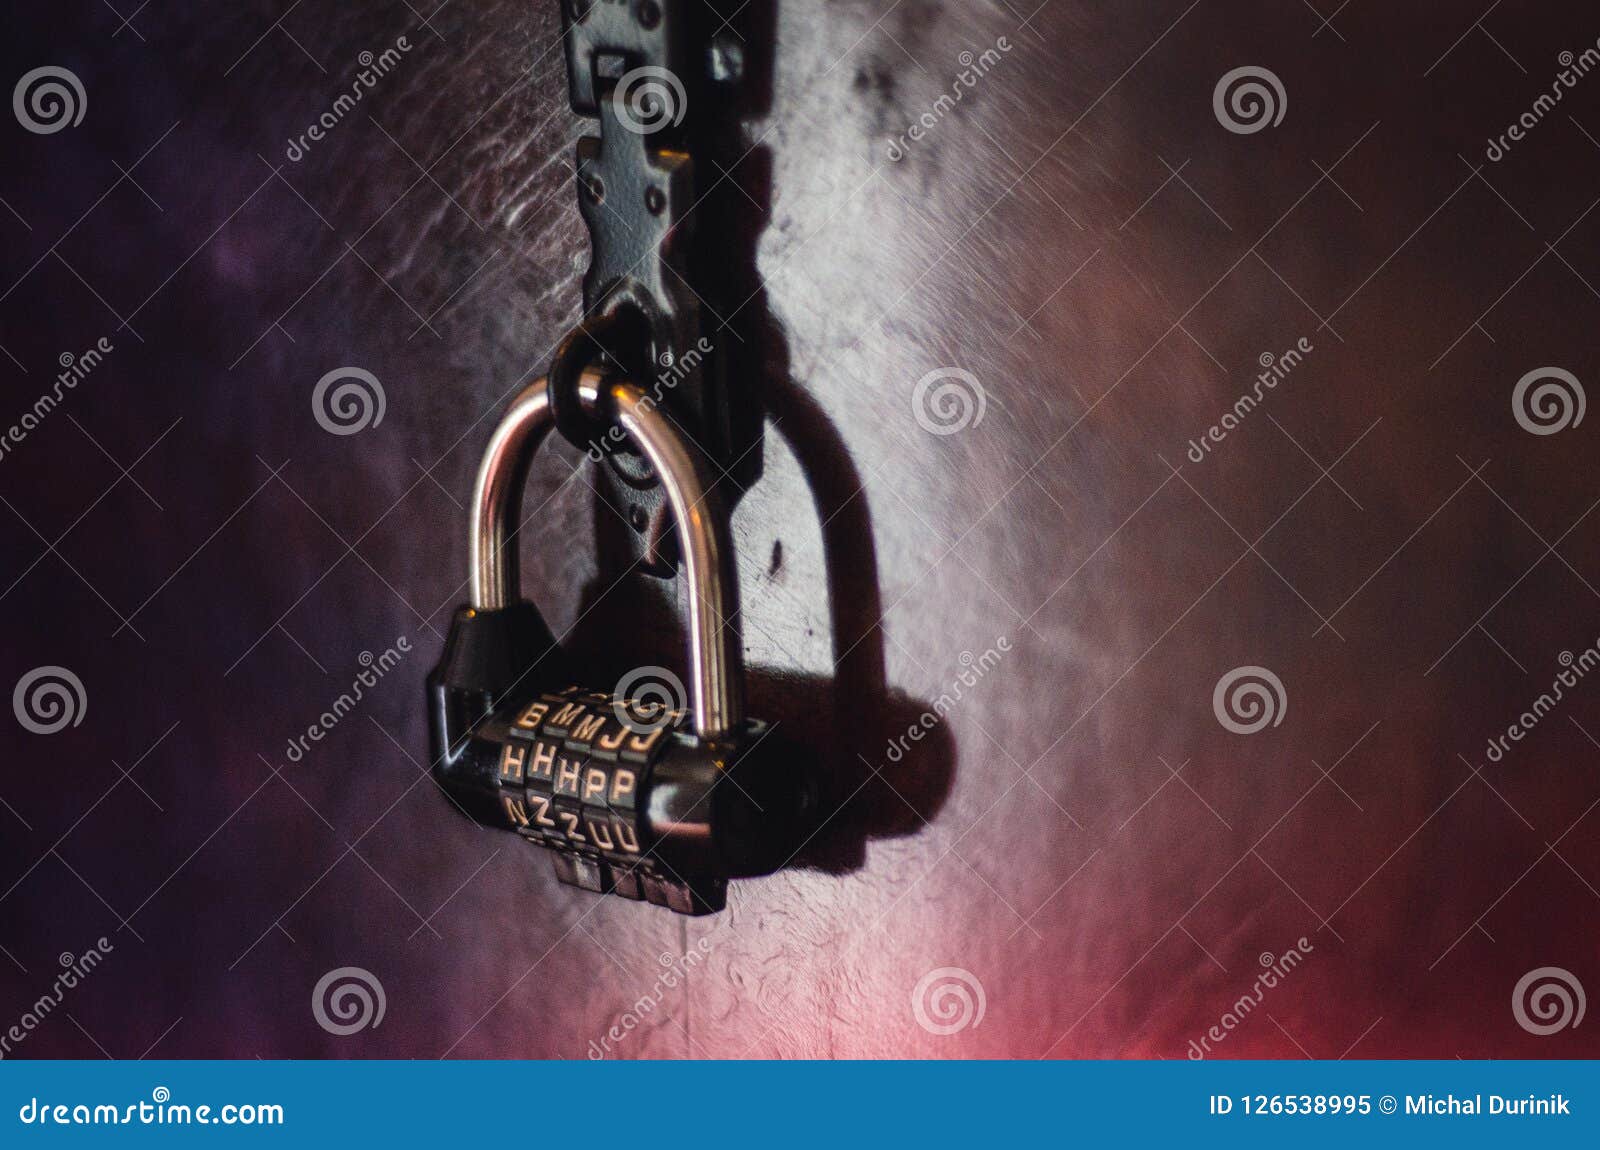 combination lock in a quest escape room